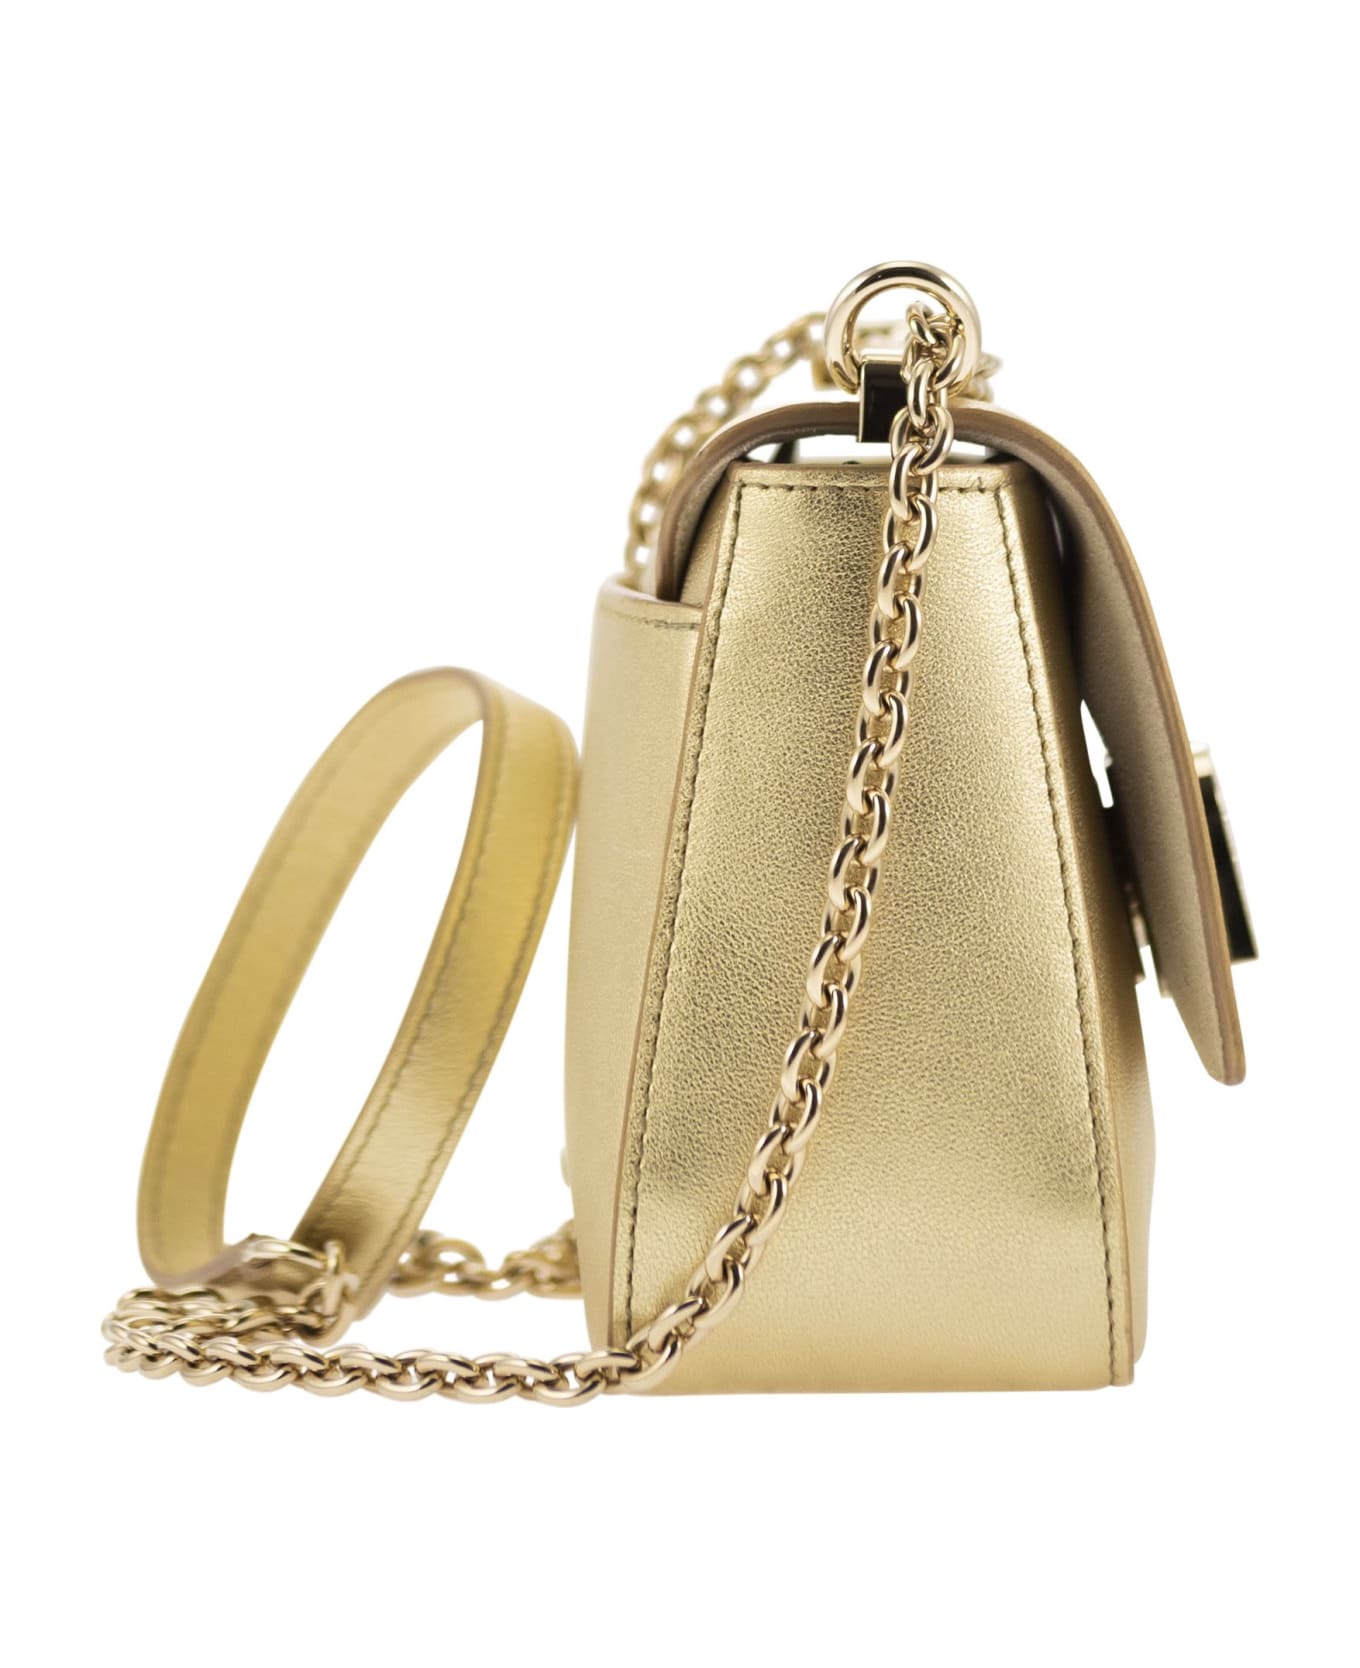 Furla 'furla 1927' Gold Calf Leather Bag - Gold トートバッグ